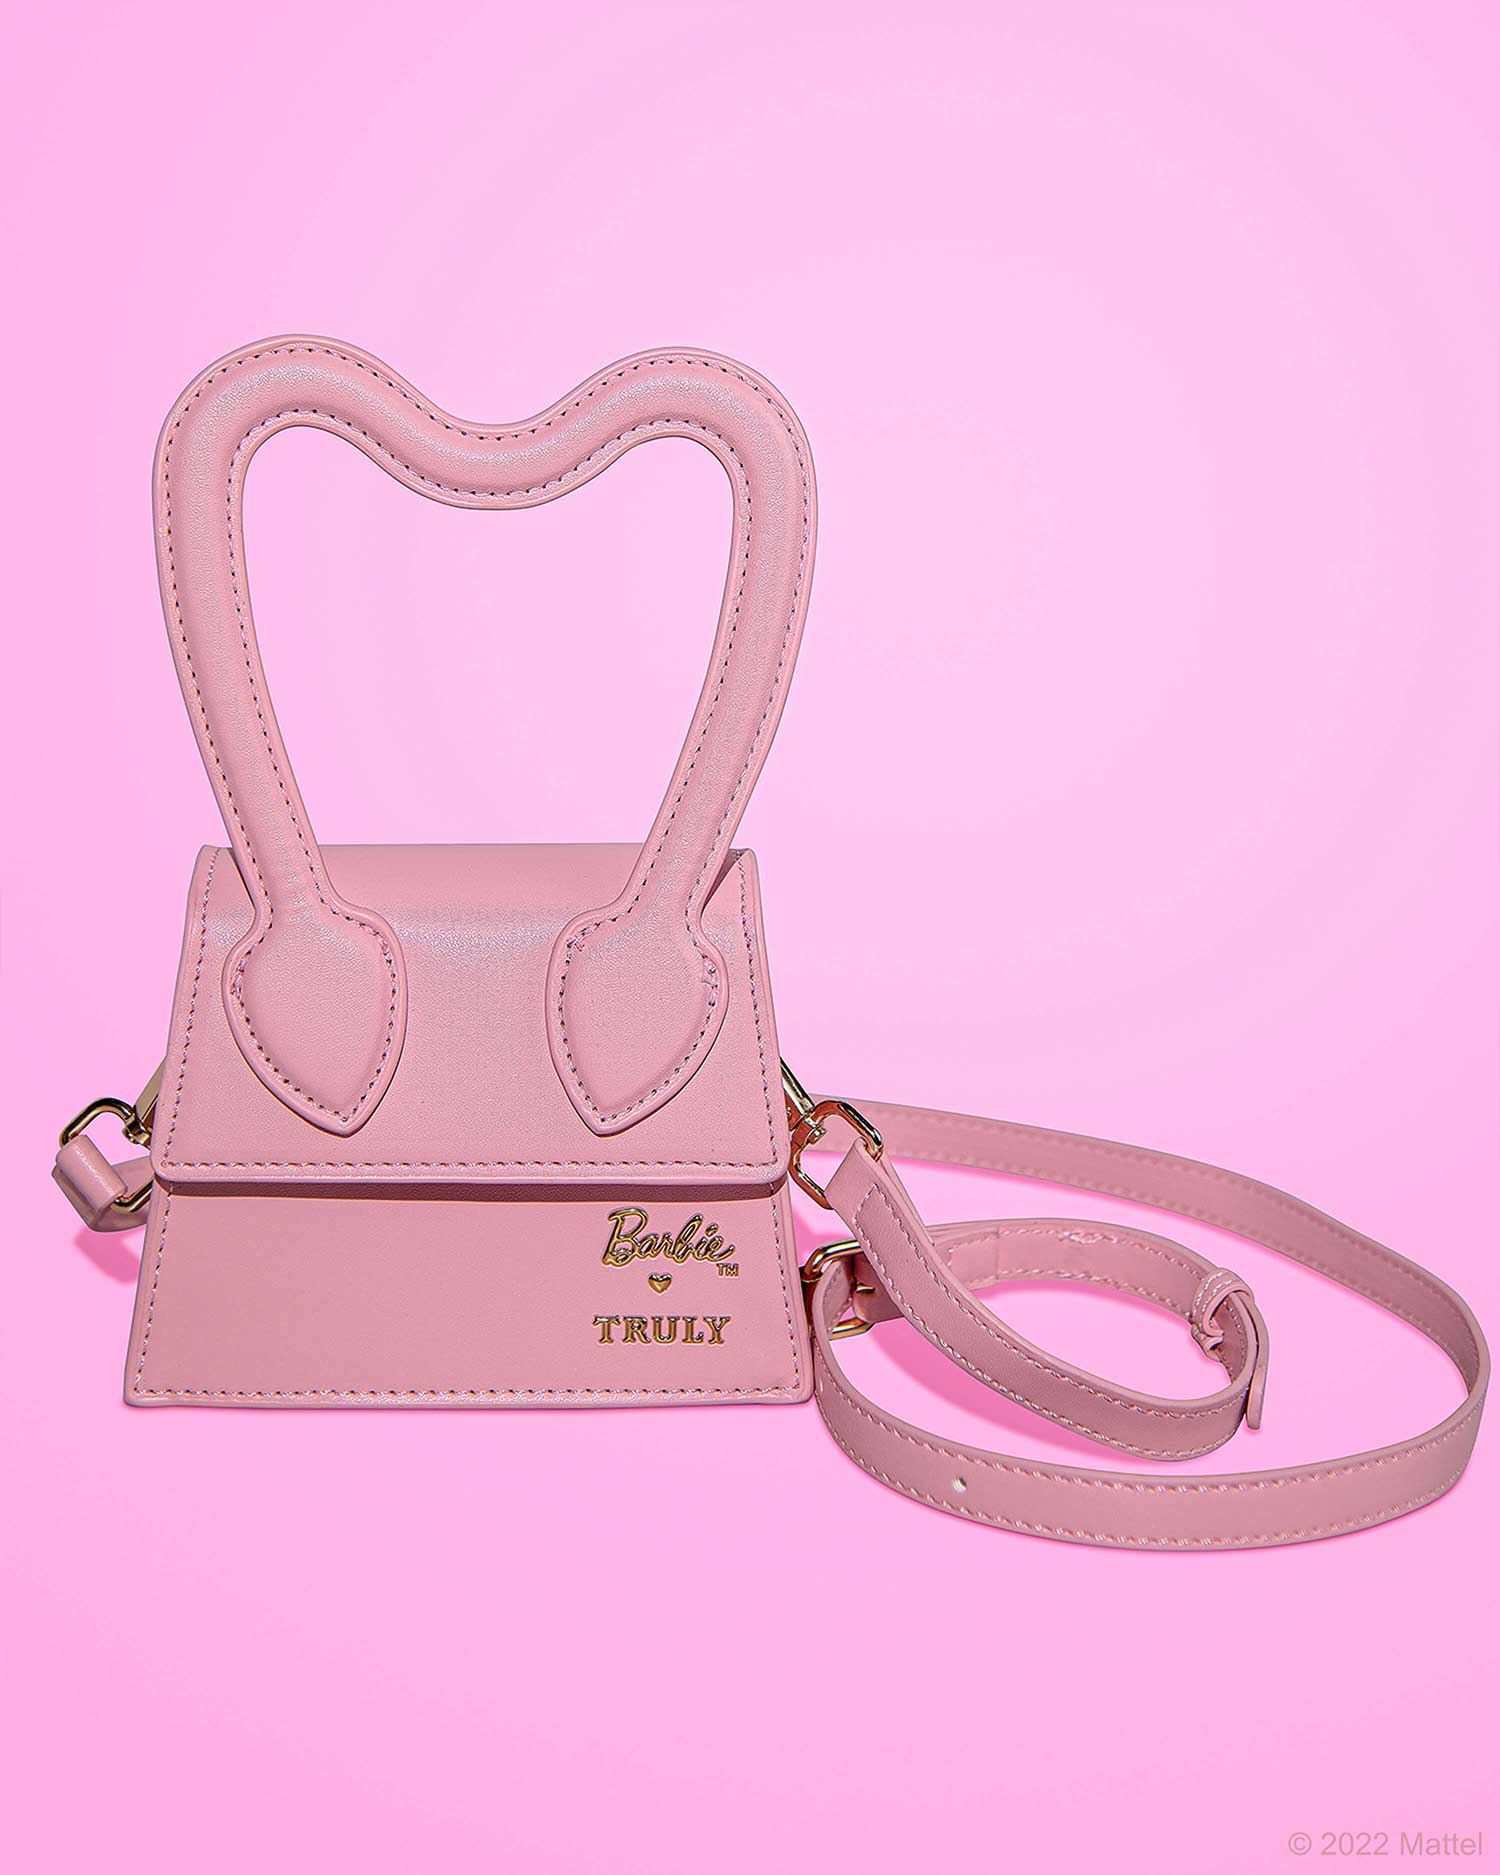 All Girls' Handbags Accessories: Handbags, Jewelry & More | Nordstrom